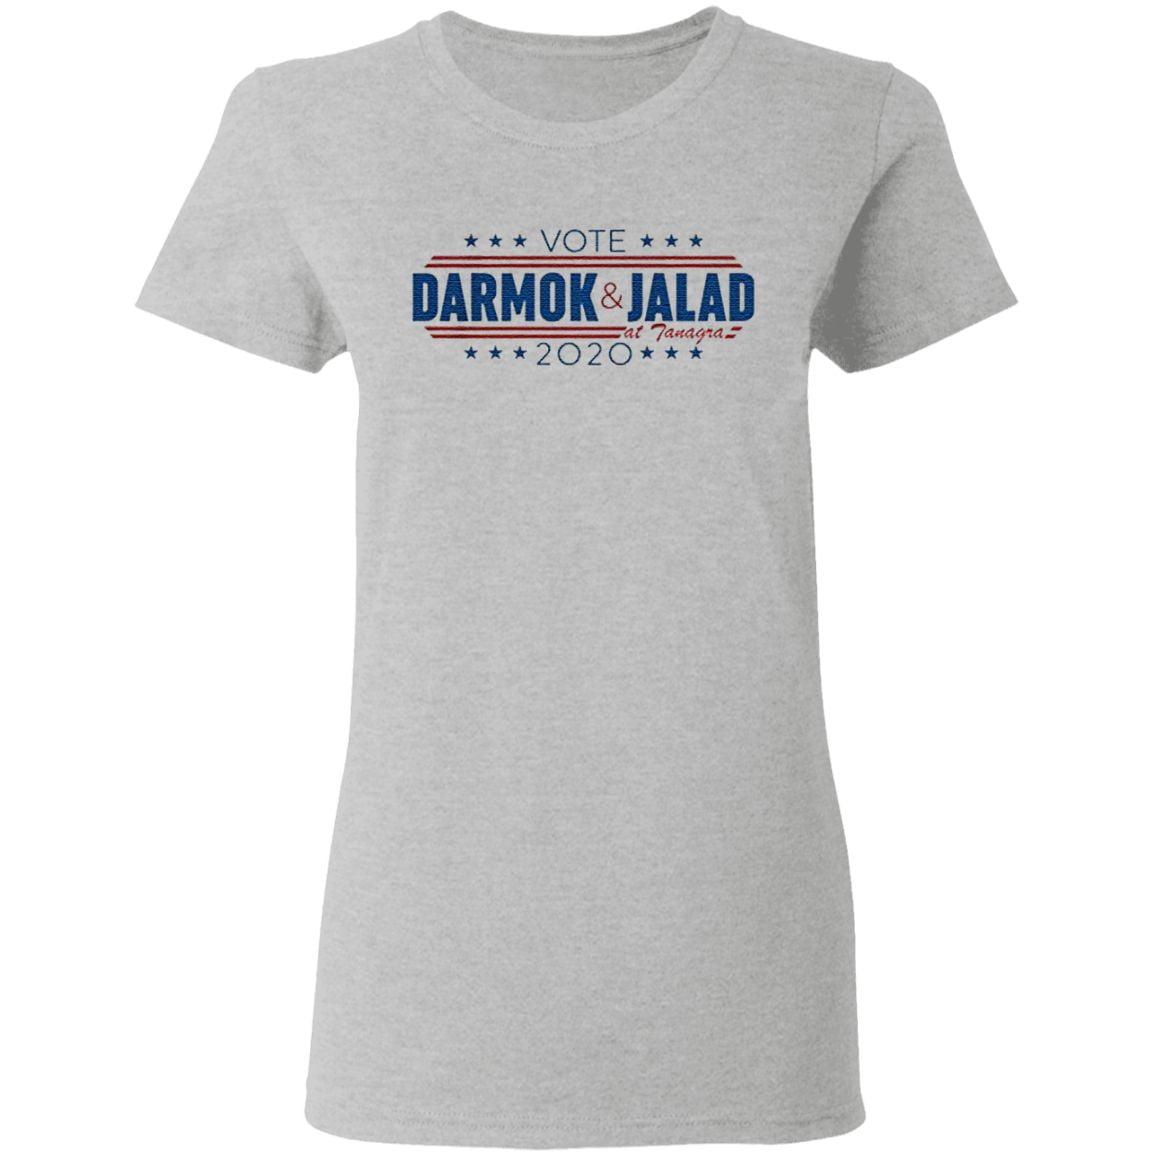 Darmok And Jalad at Tanagra 2020 shirt